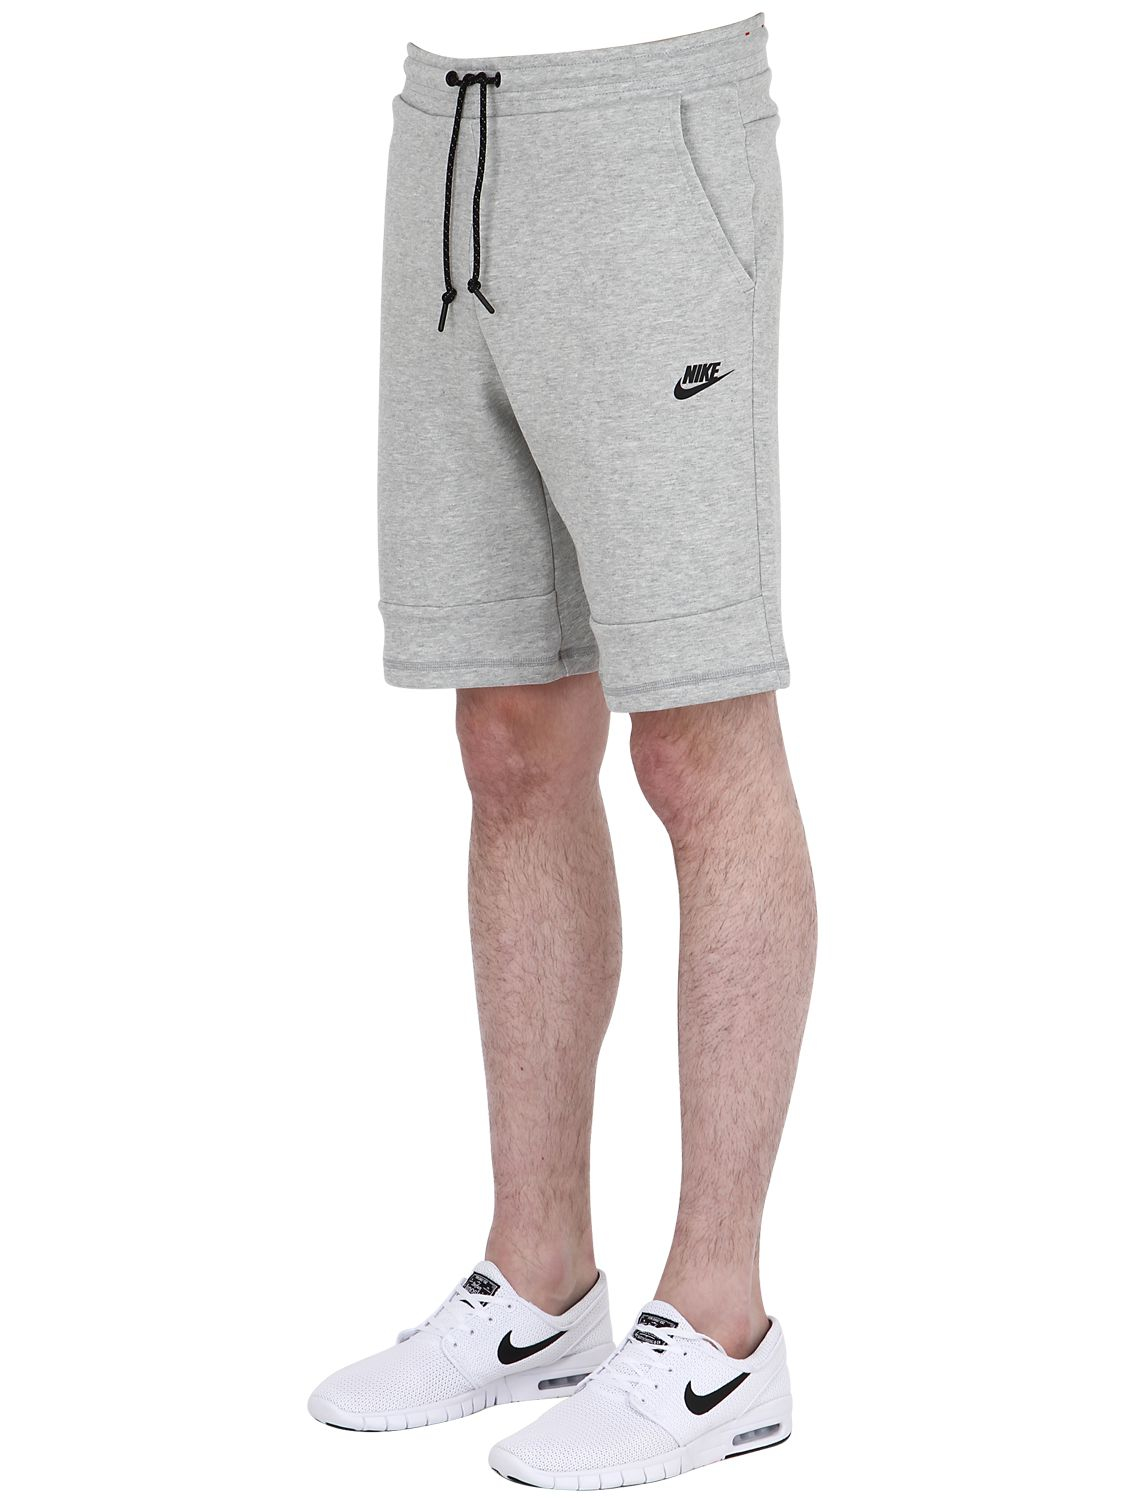 nike tracksuit with shorts